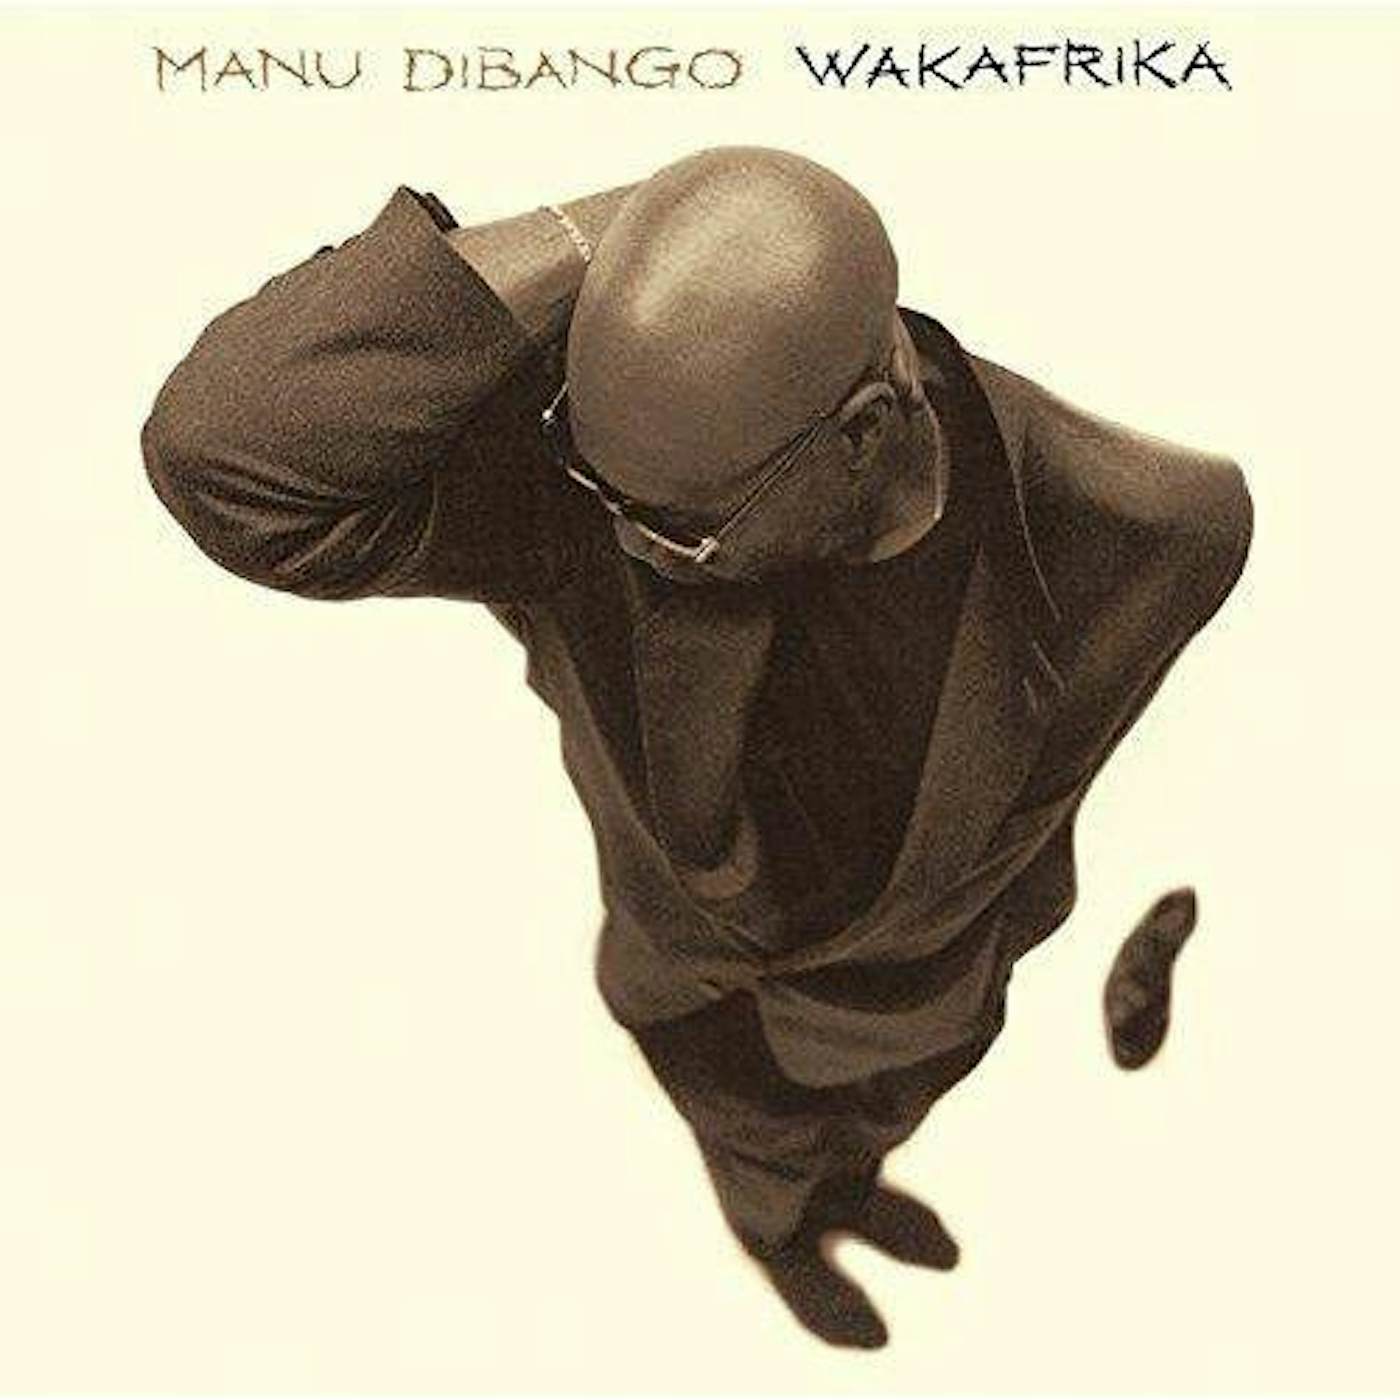 Manu Dibango Wakafrika (Import) Vinyl Record